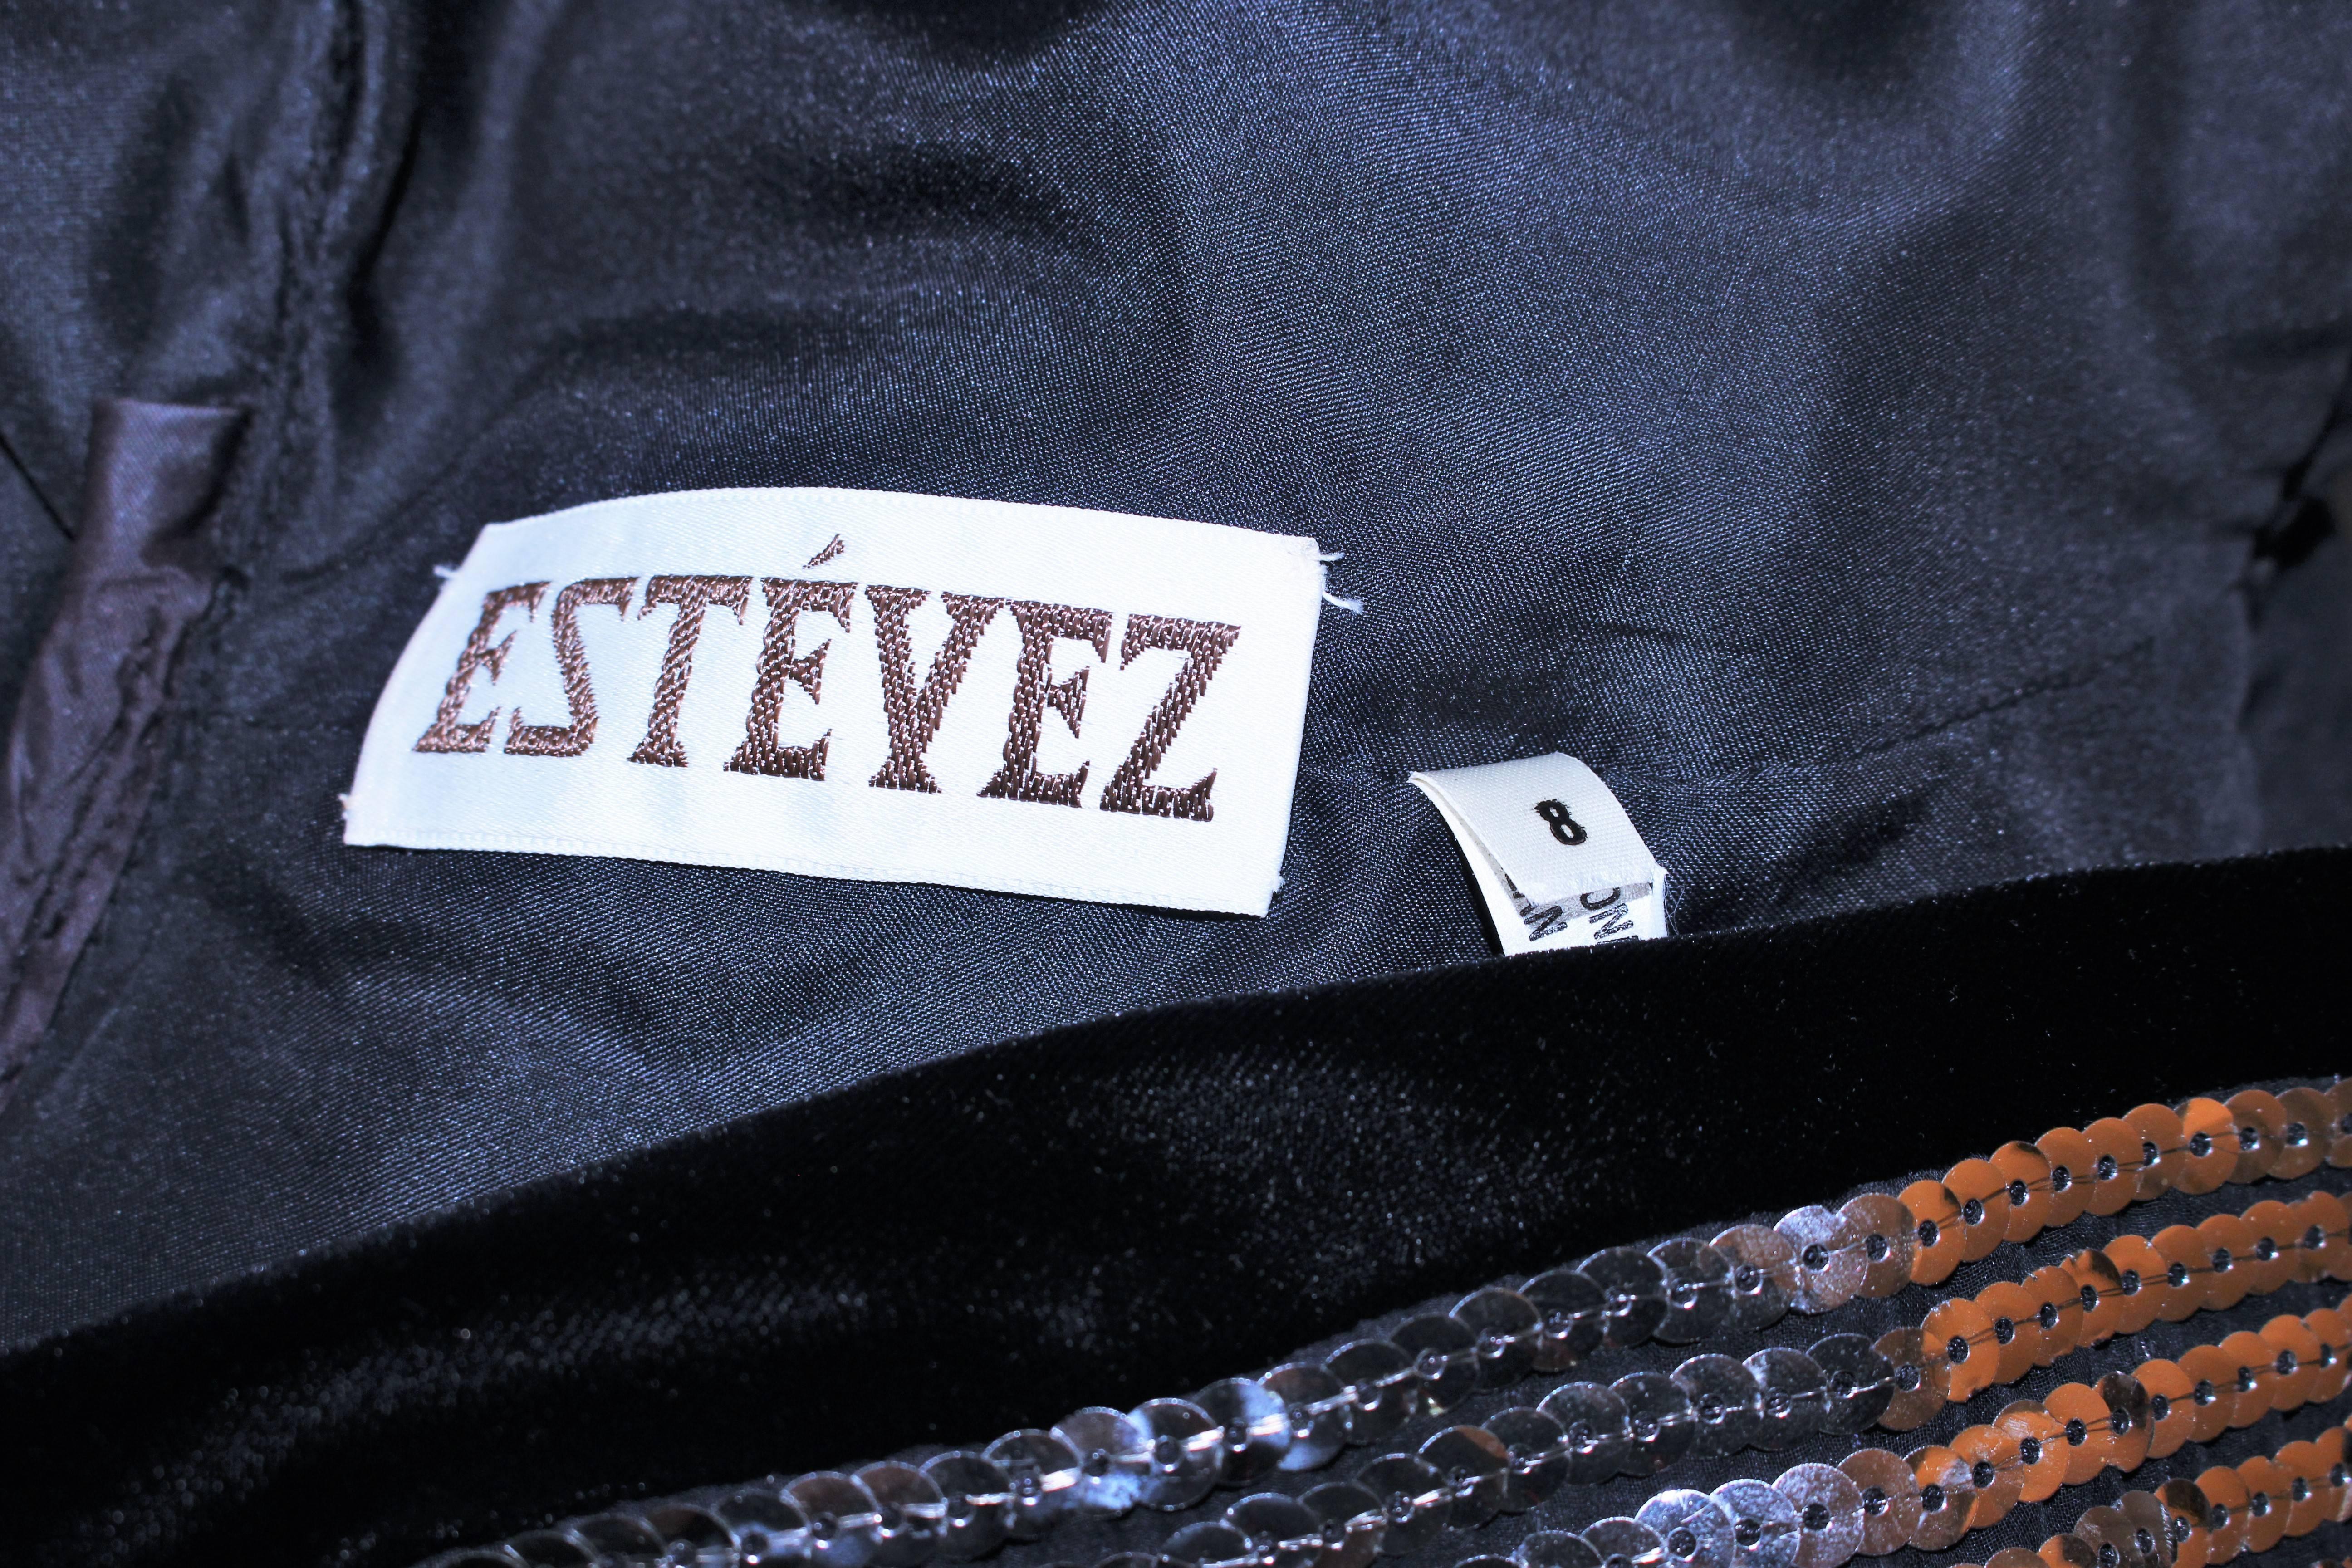 ESTEVEZ Silver Sequin and Velvet Gown Peplum Size 2 For Sale 3